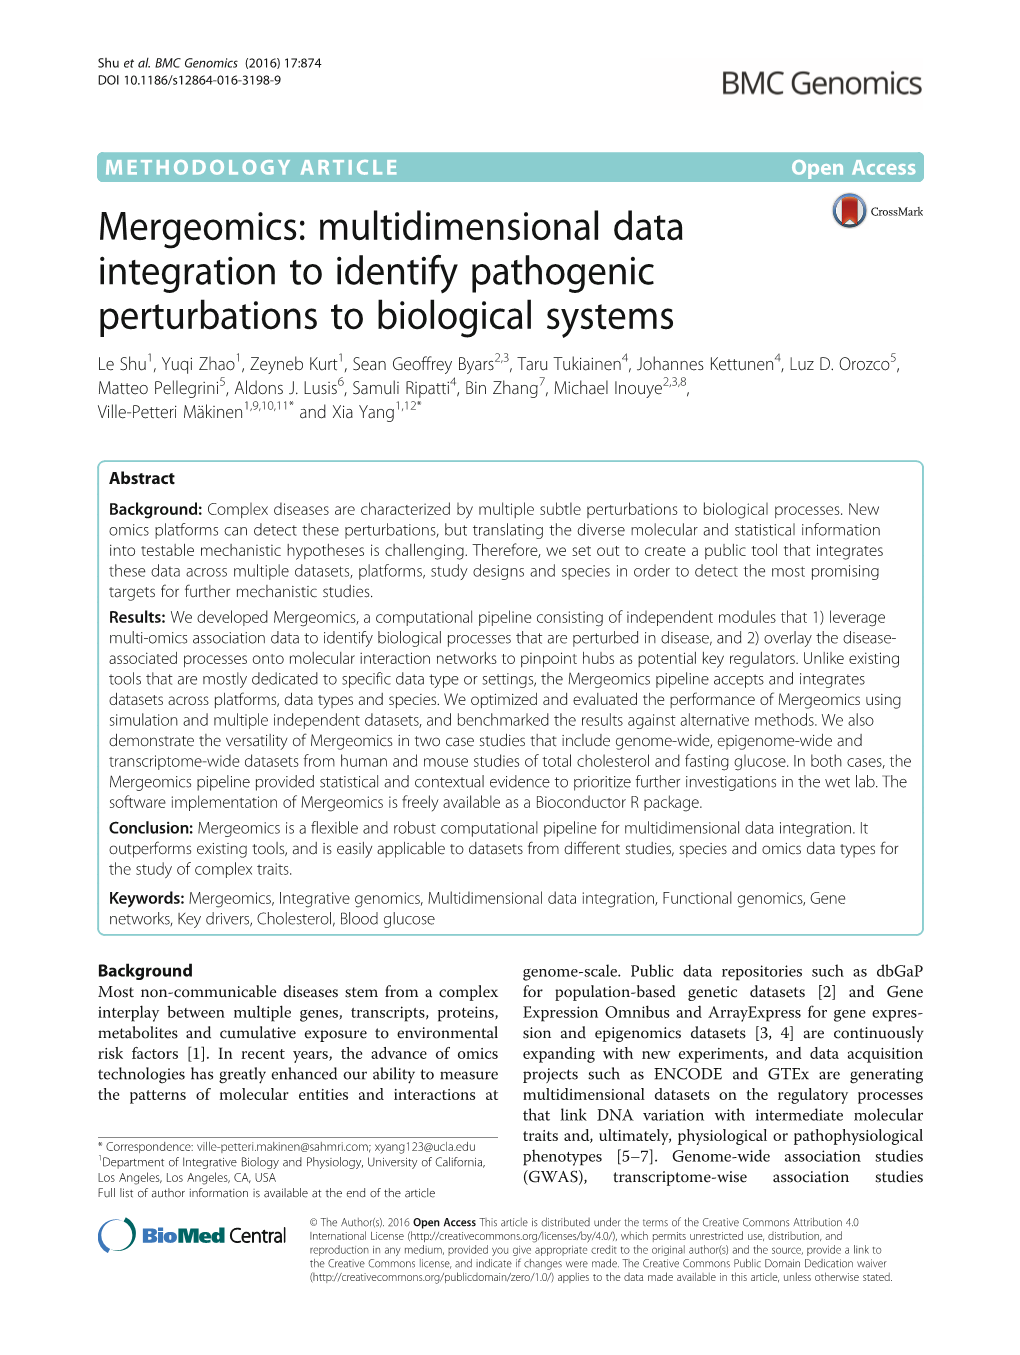 Mergeomics: Multidimensional Data Integration to Identify Pathogenic Perturbations to Biological Systems